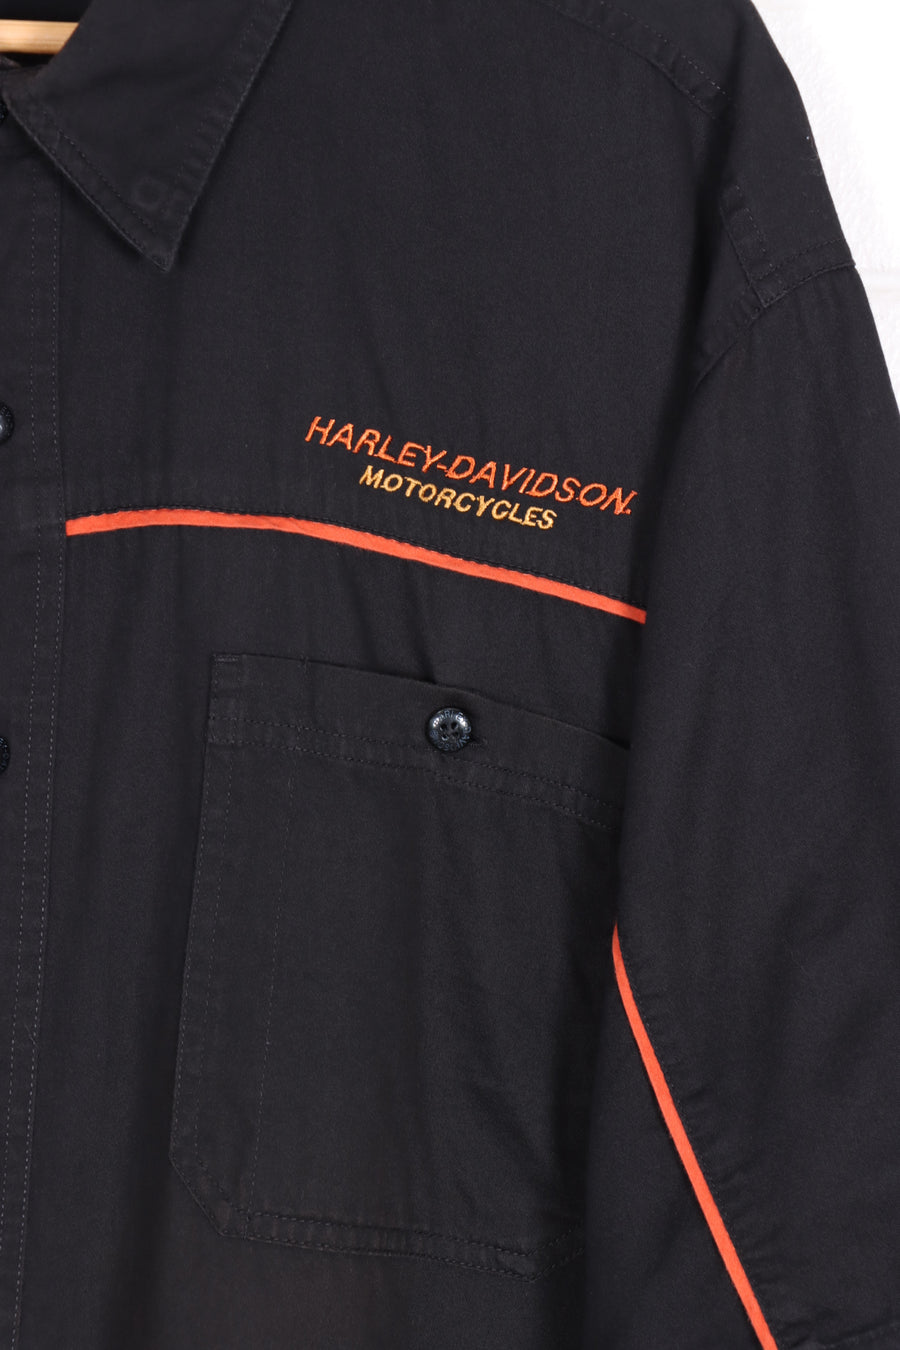 HARLEY DAVIDSON Embroidered Eagle Short Sleeve Shirt (XXXL)